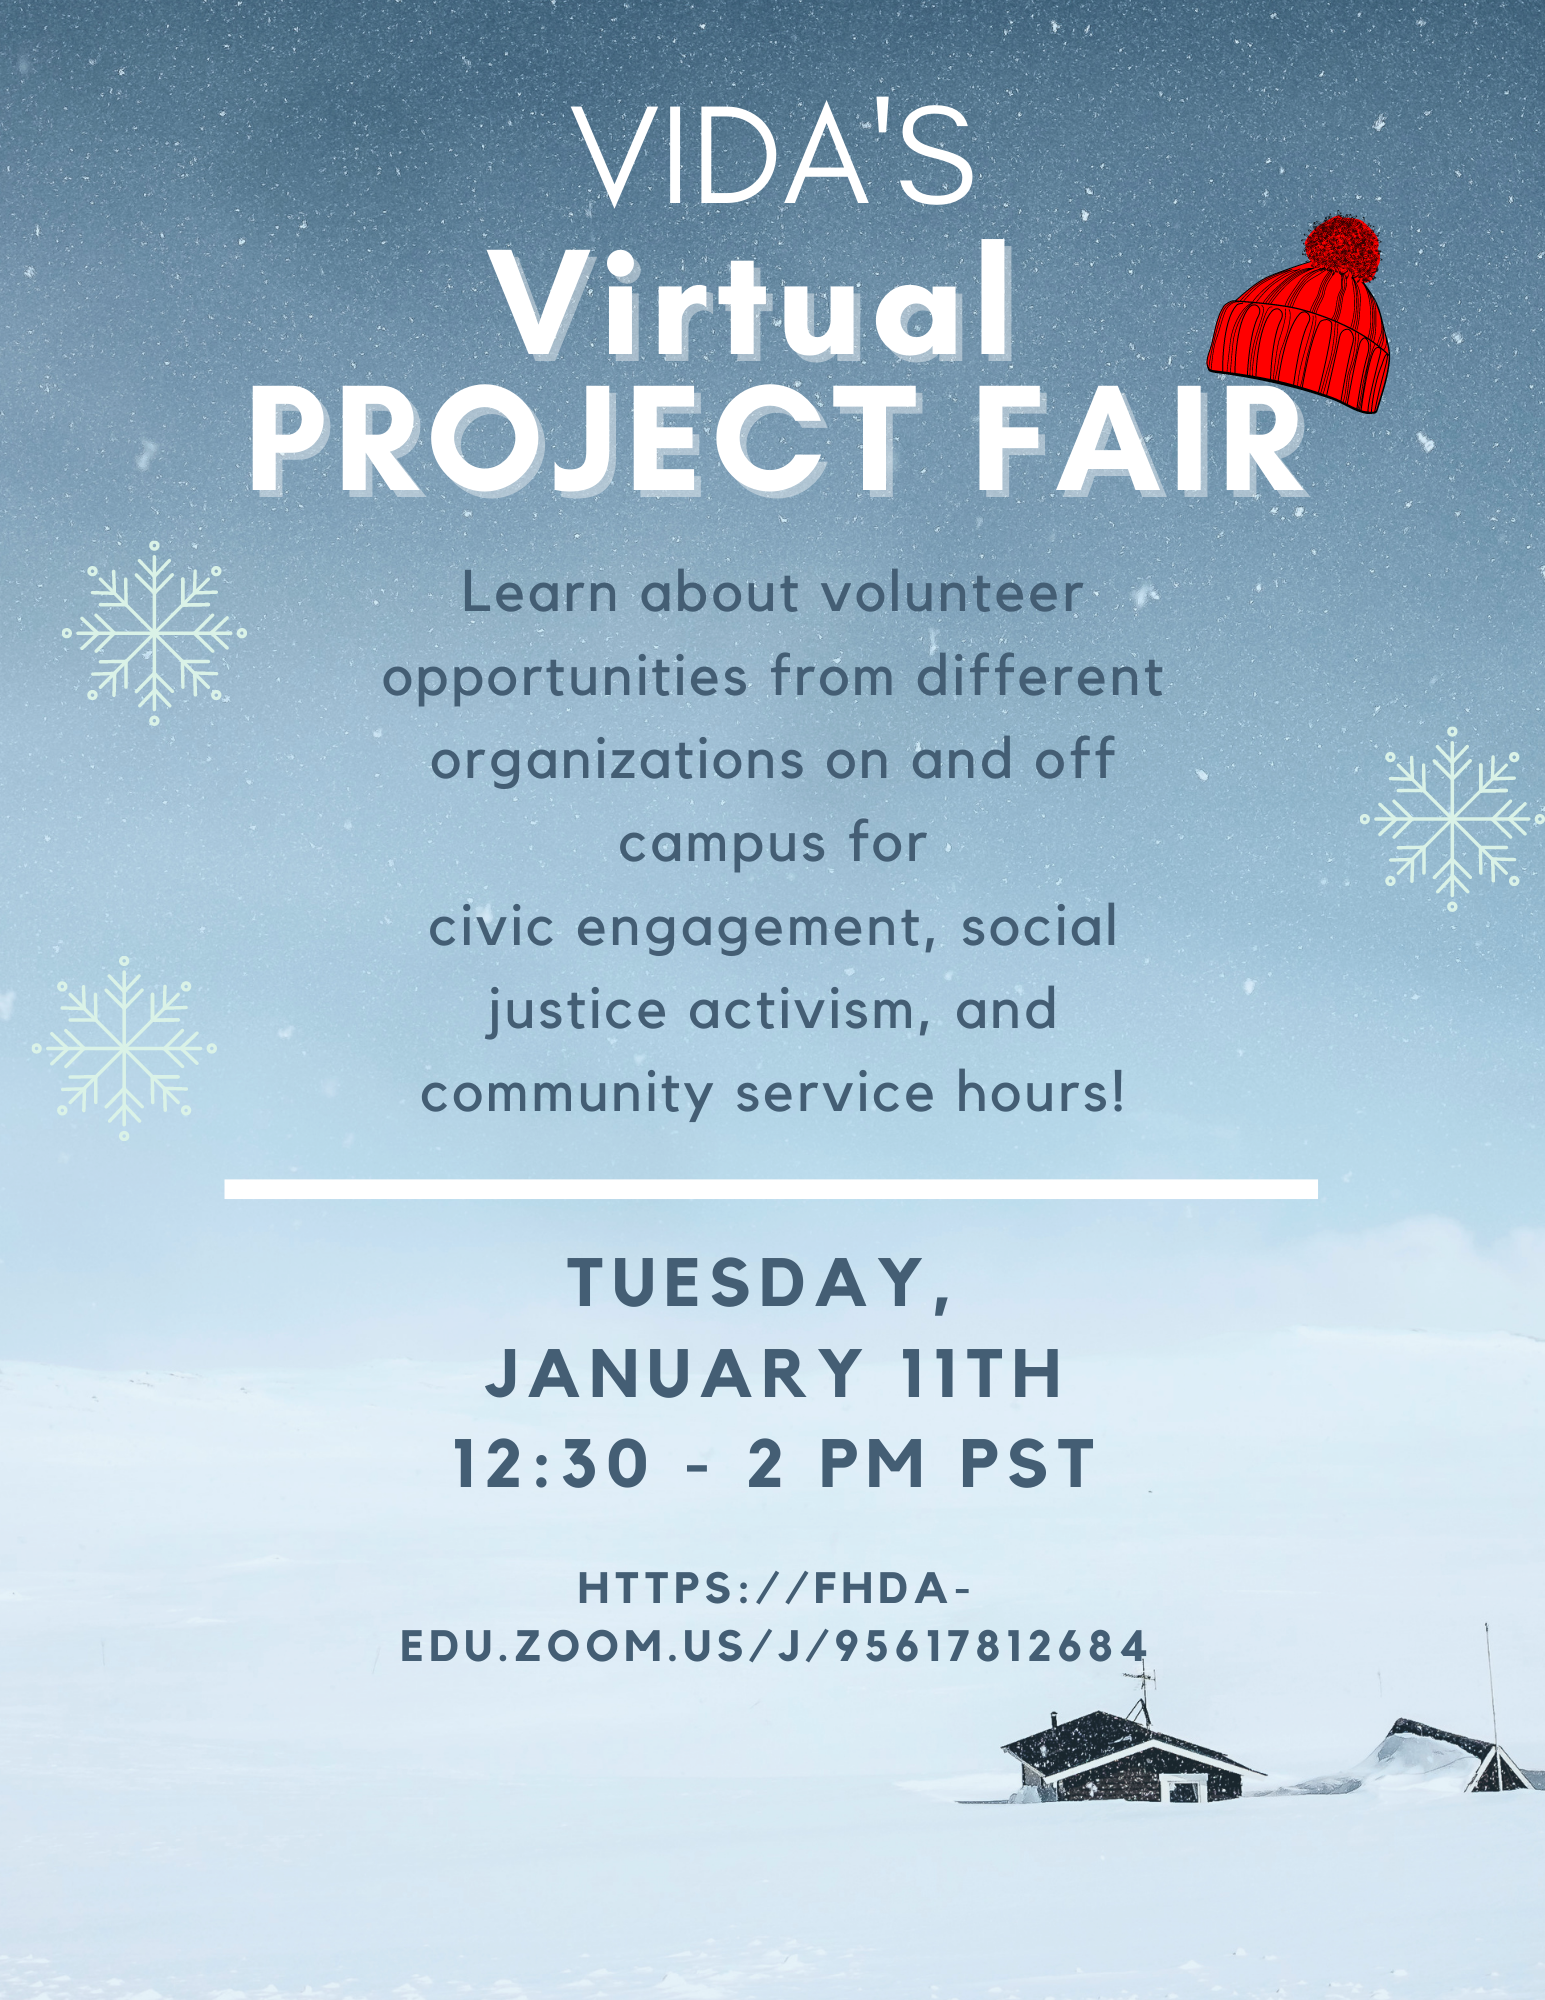 vida's virtual project fair flyer